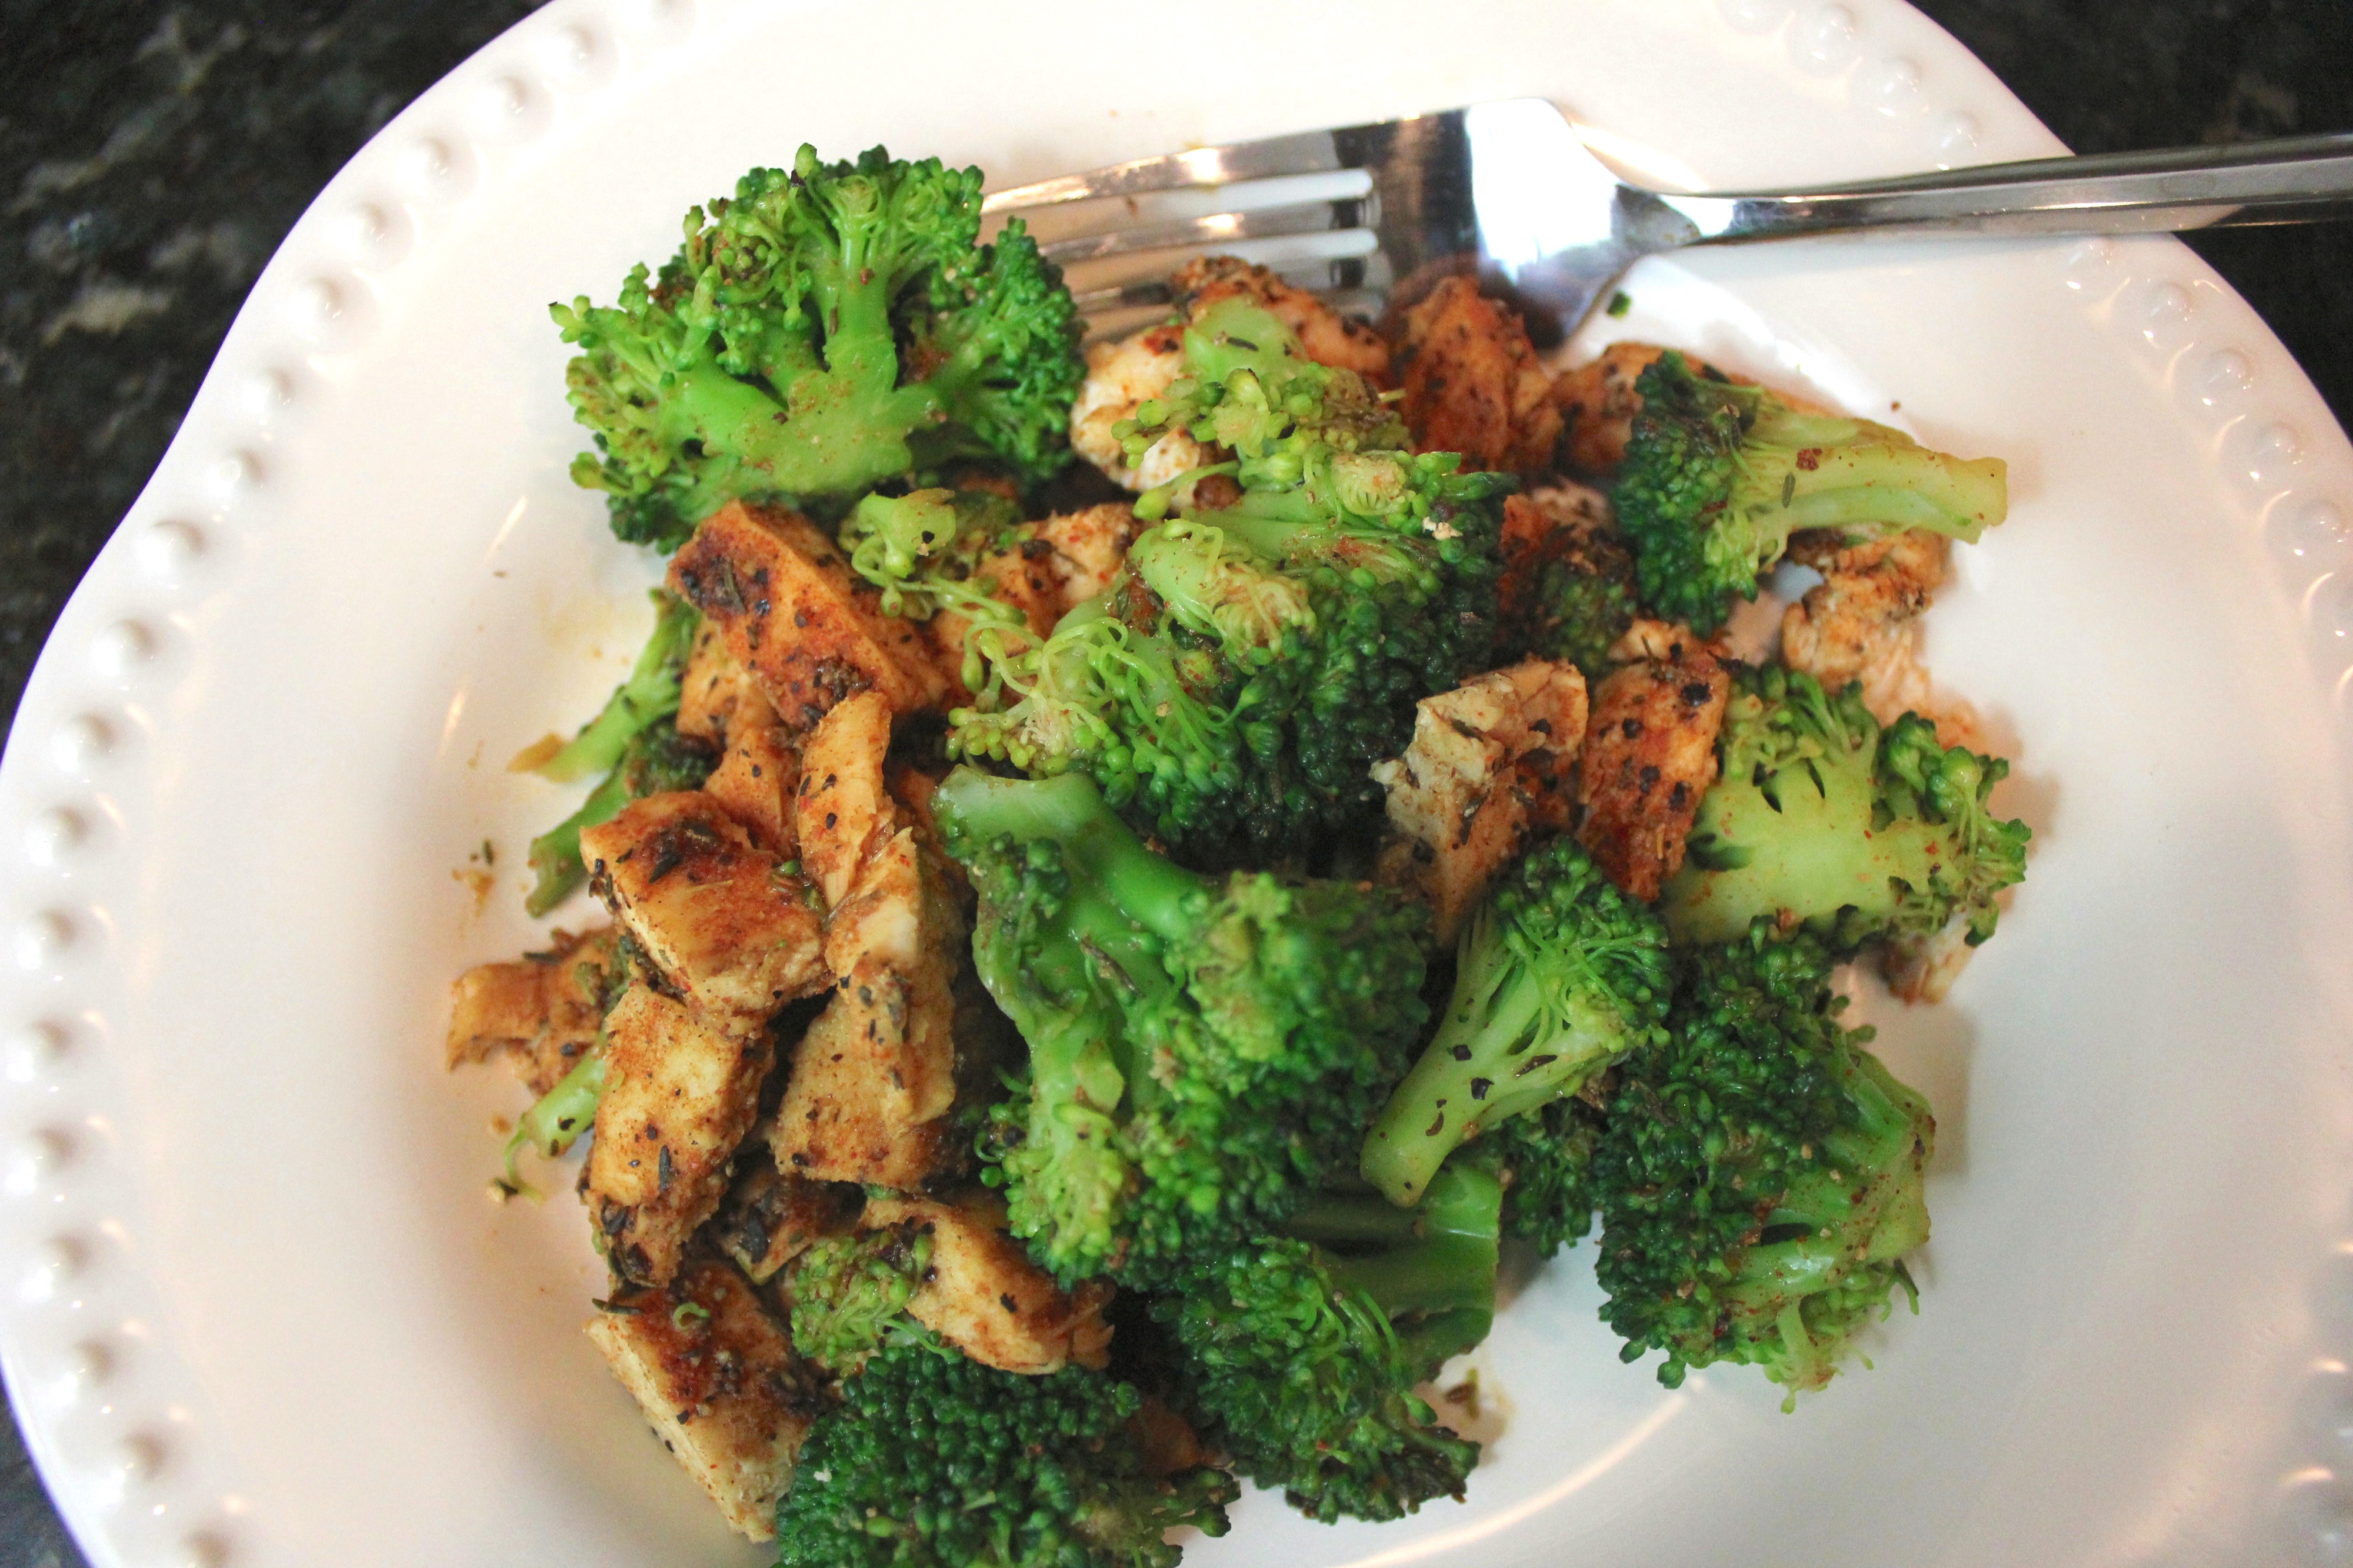 Southwestern chicken and broccoli